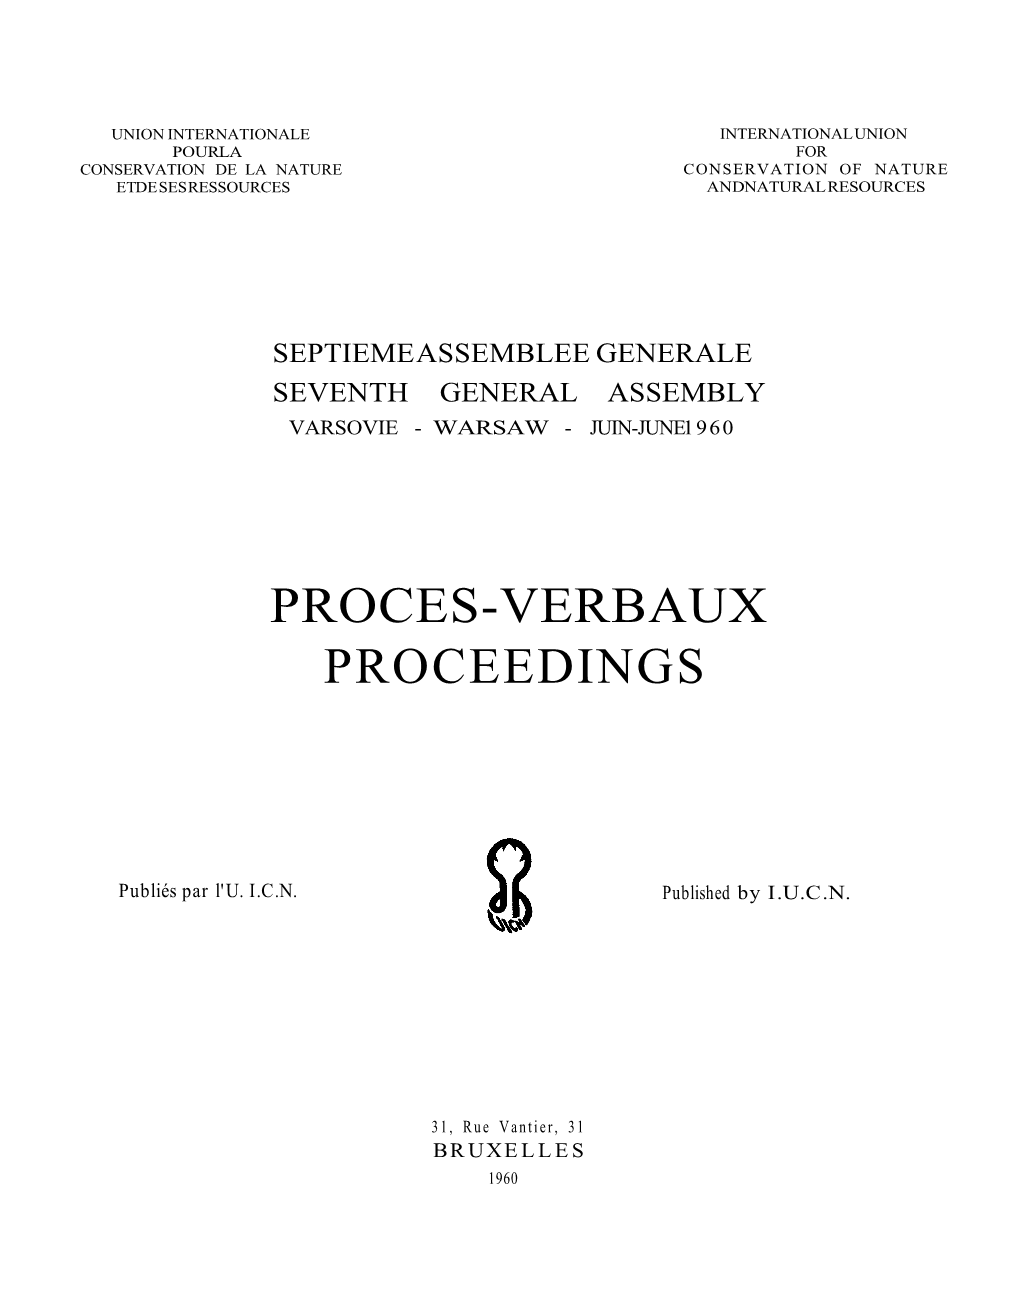 Proces-Verbaux Proceedings